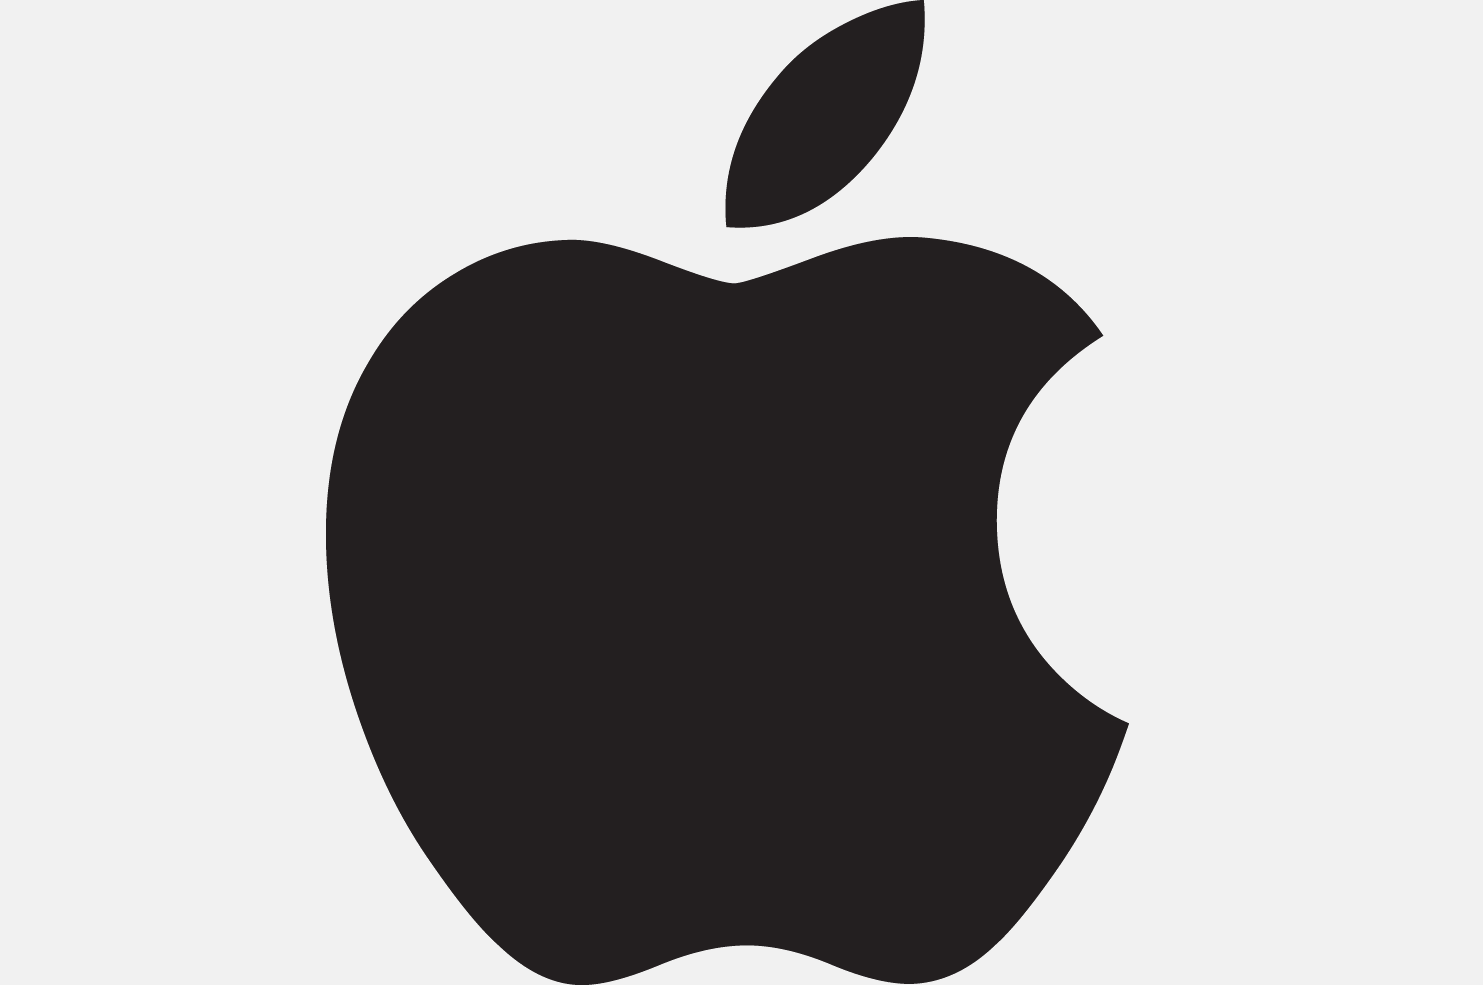 Best apple iphone clipart - ClipartFox